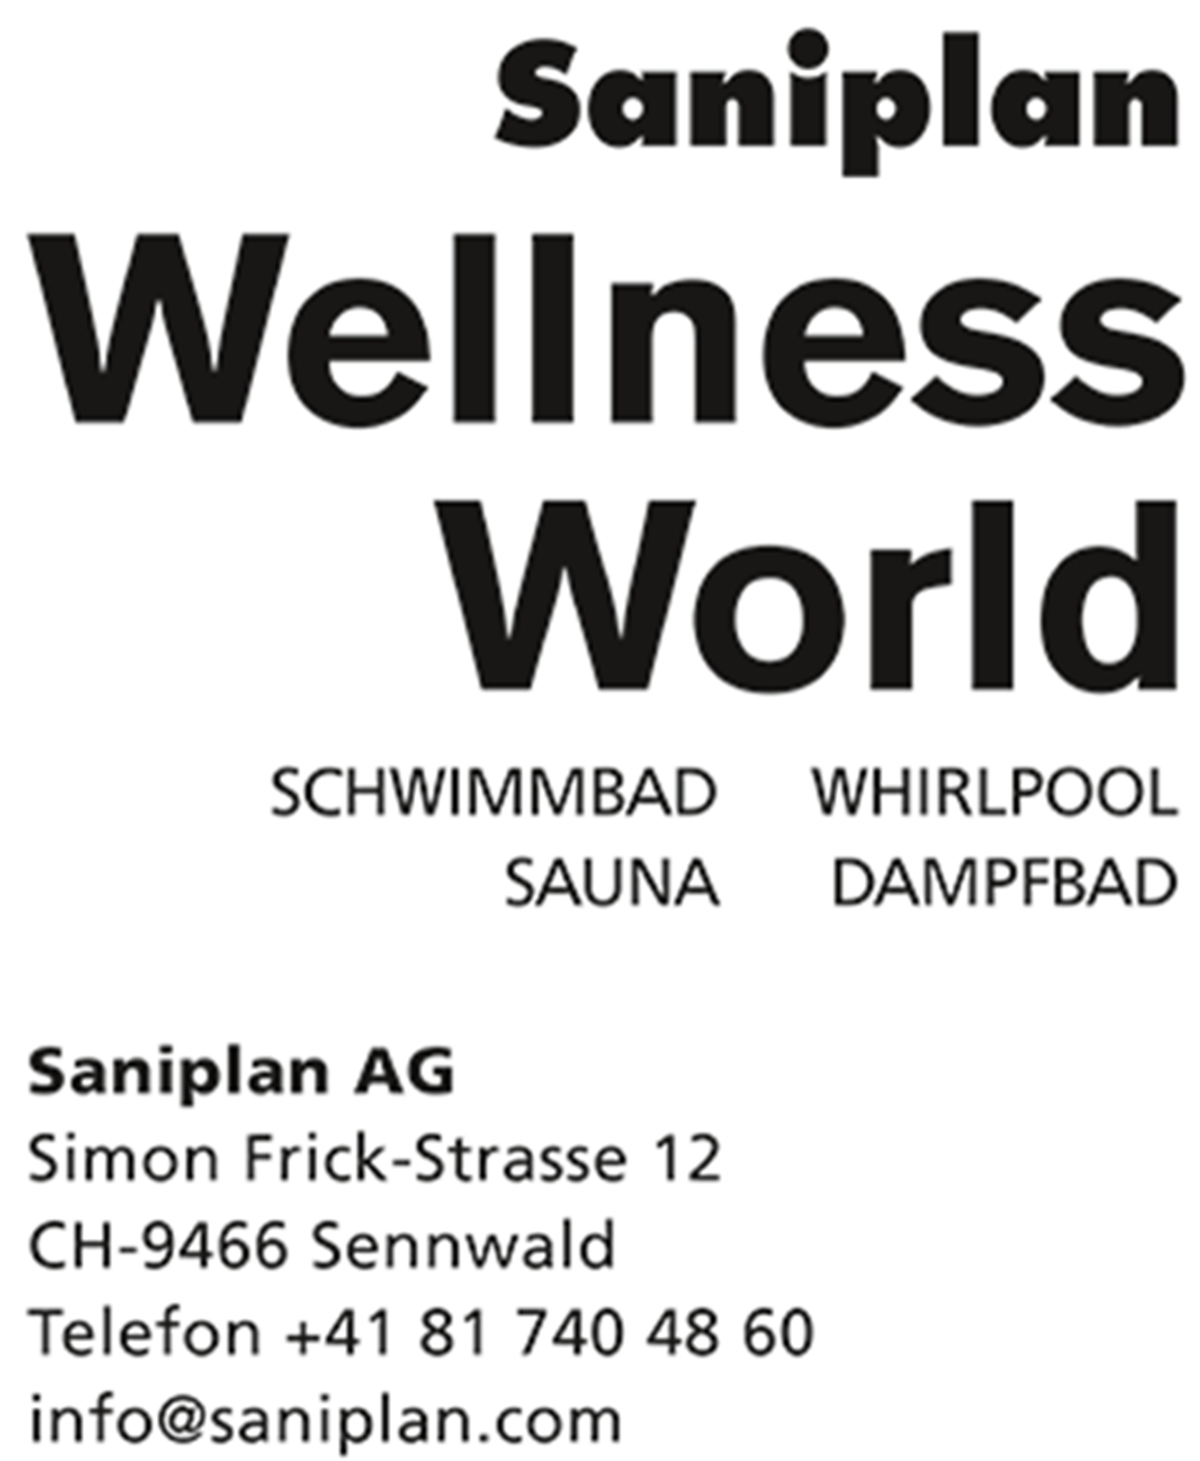 Saniplan AG Wellness World